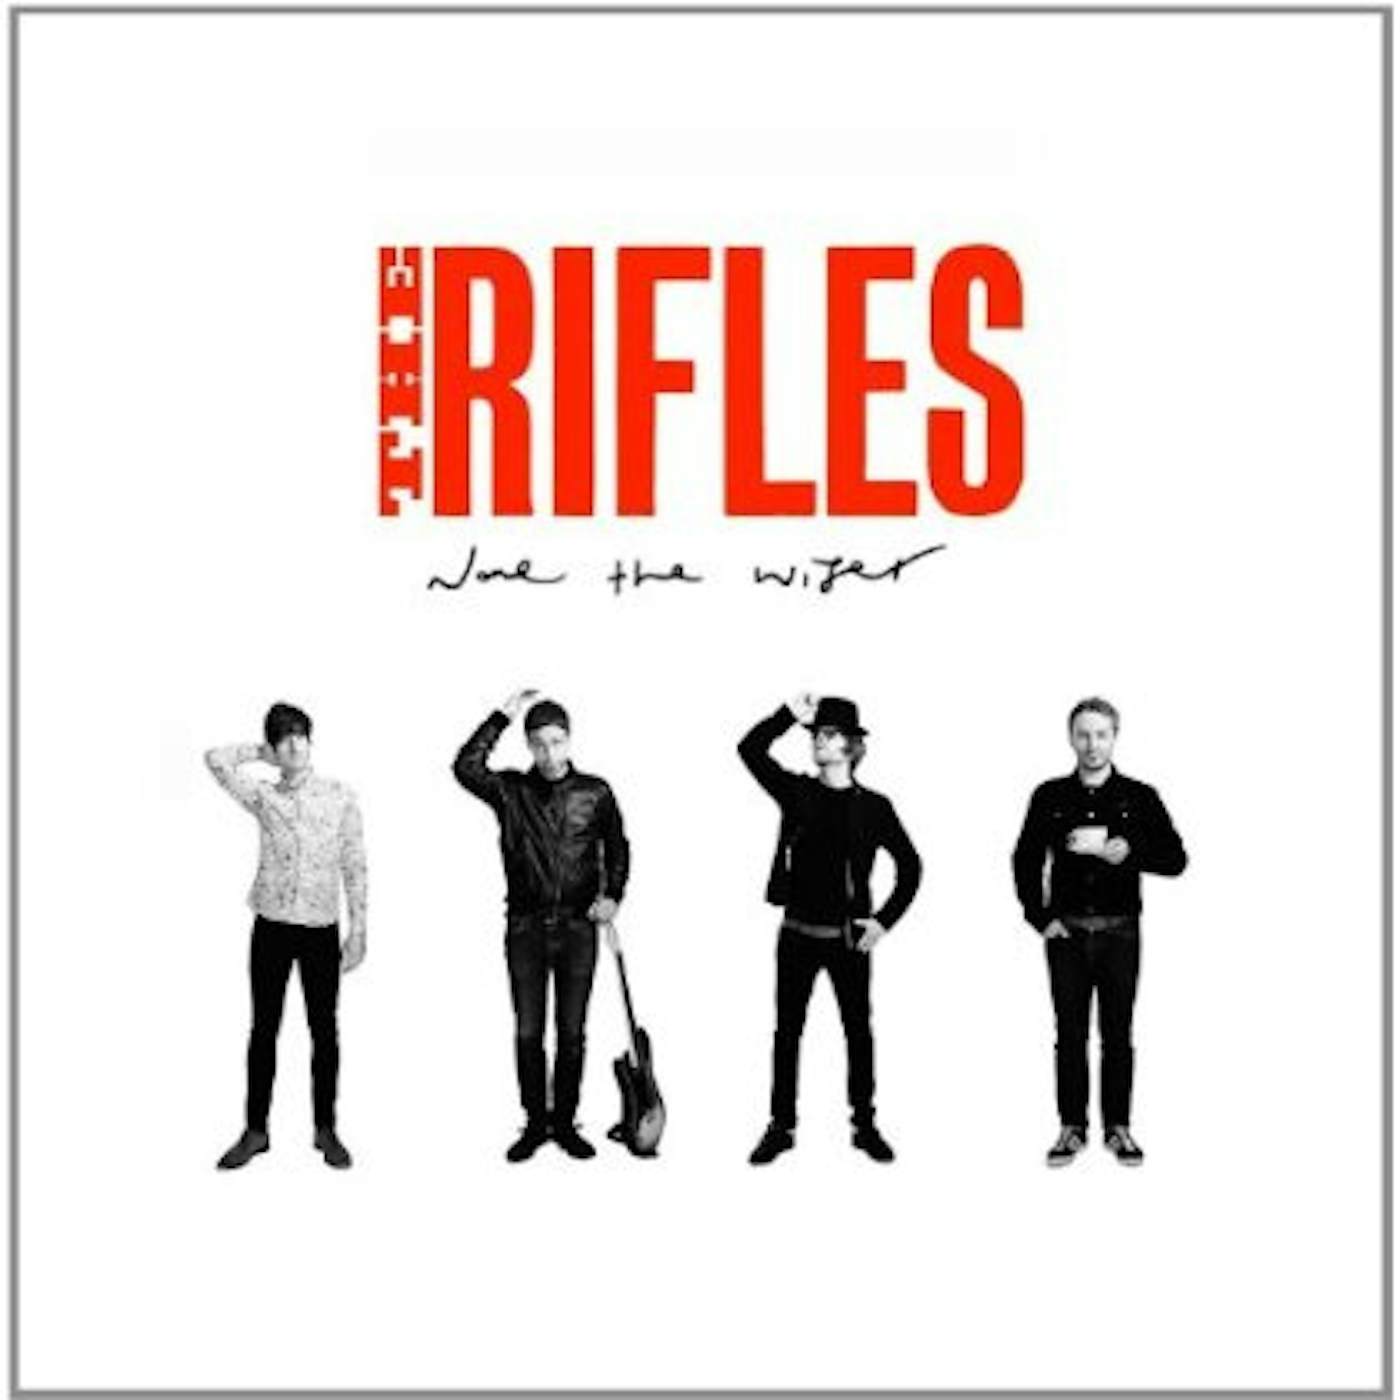 Rifles NONE THE WISER CD